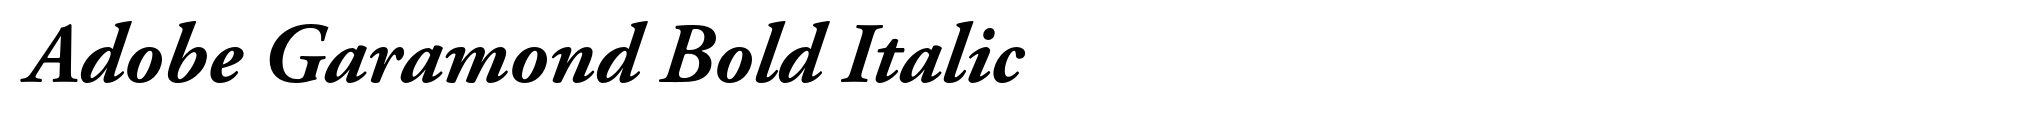 Adobe Garamond Bold Italic image